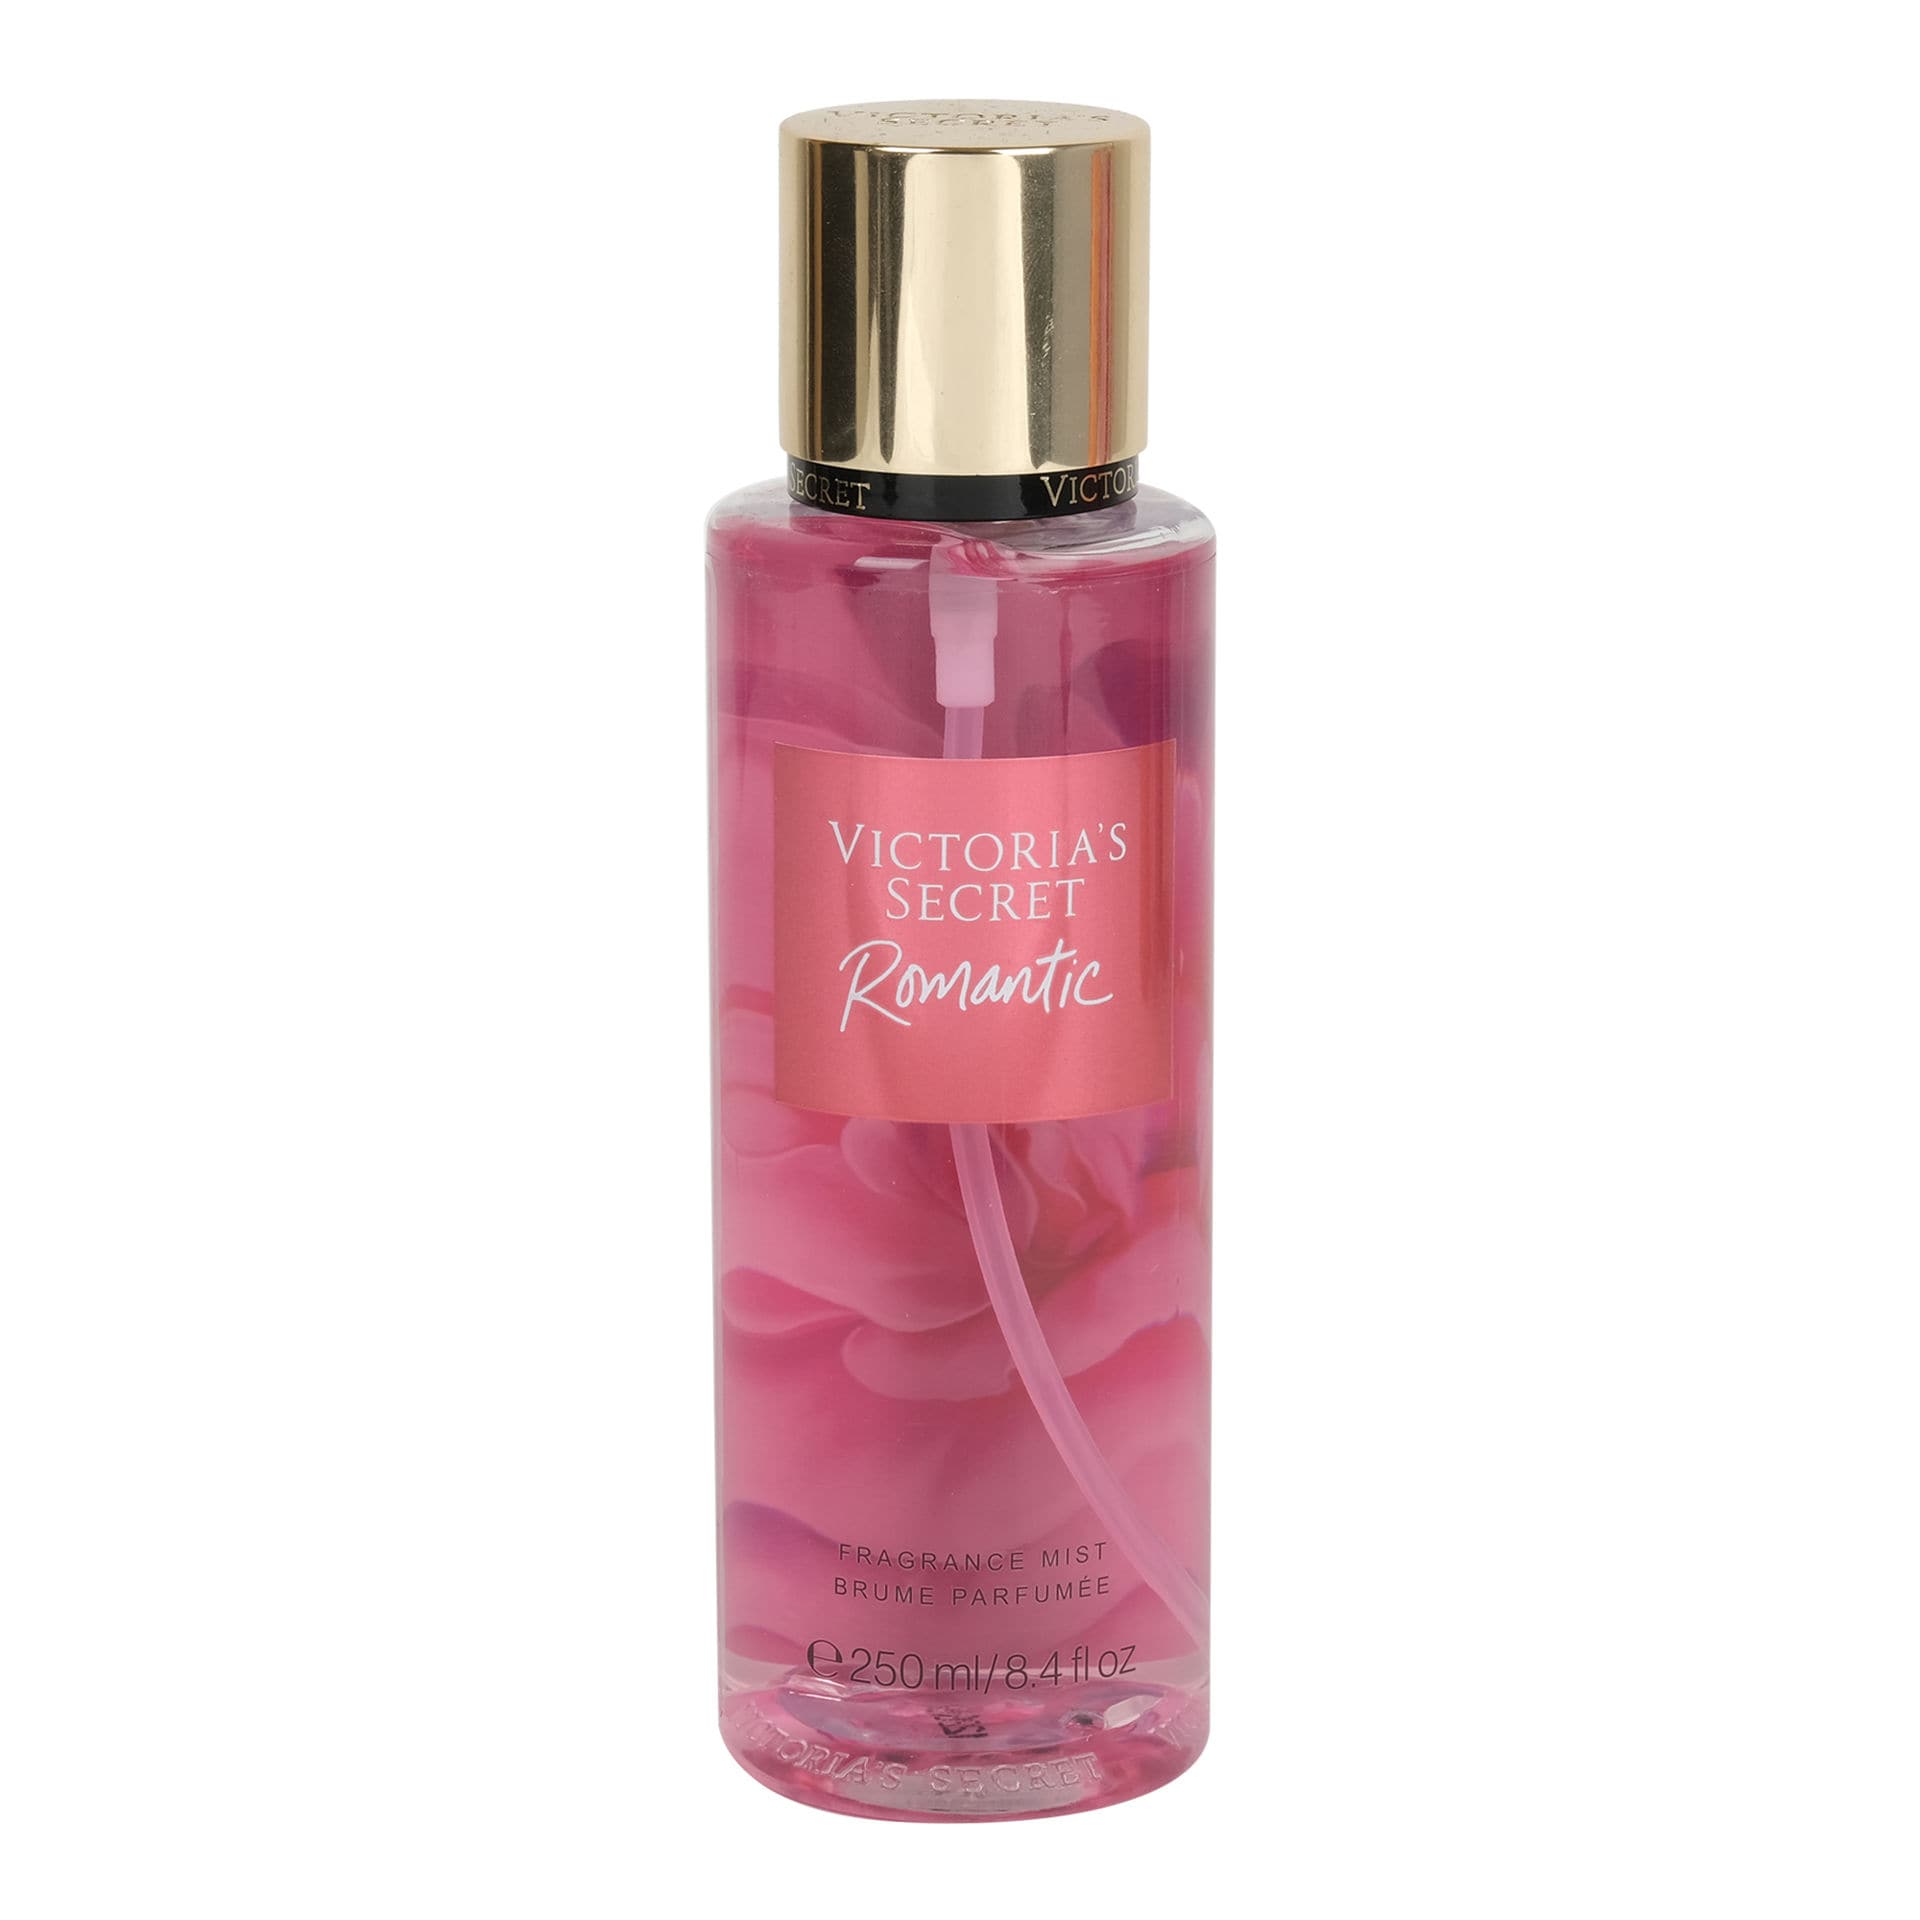 Amber Romance by Victoria's Secret Fragrance Mist Spray 8.4 oz (women)